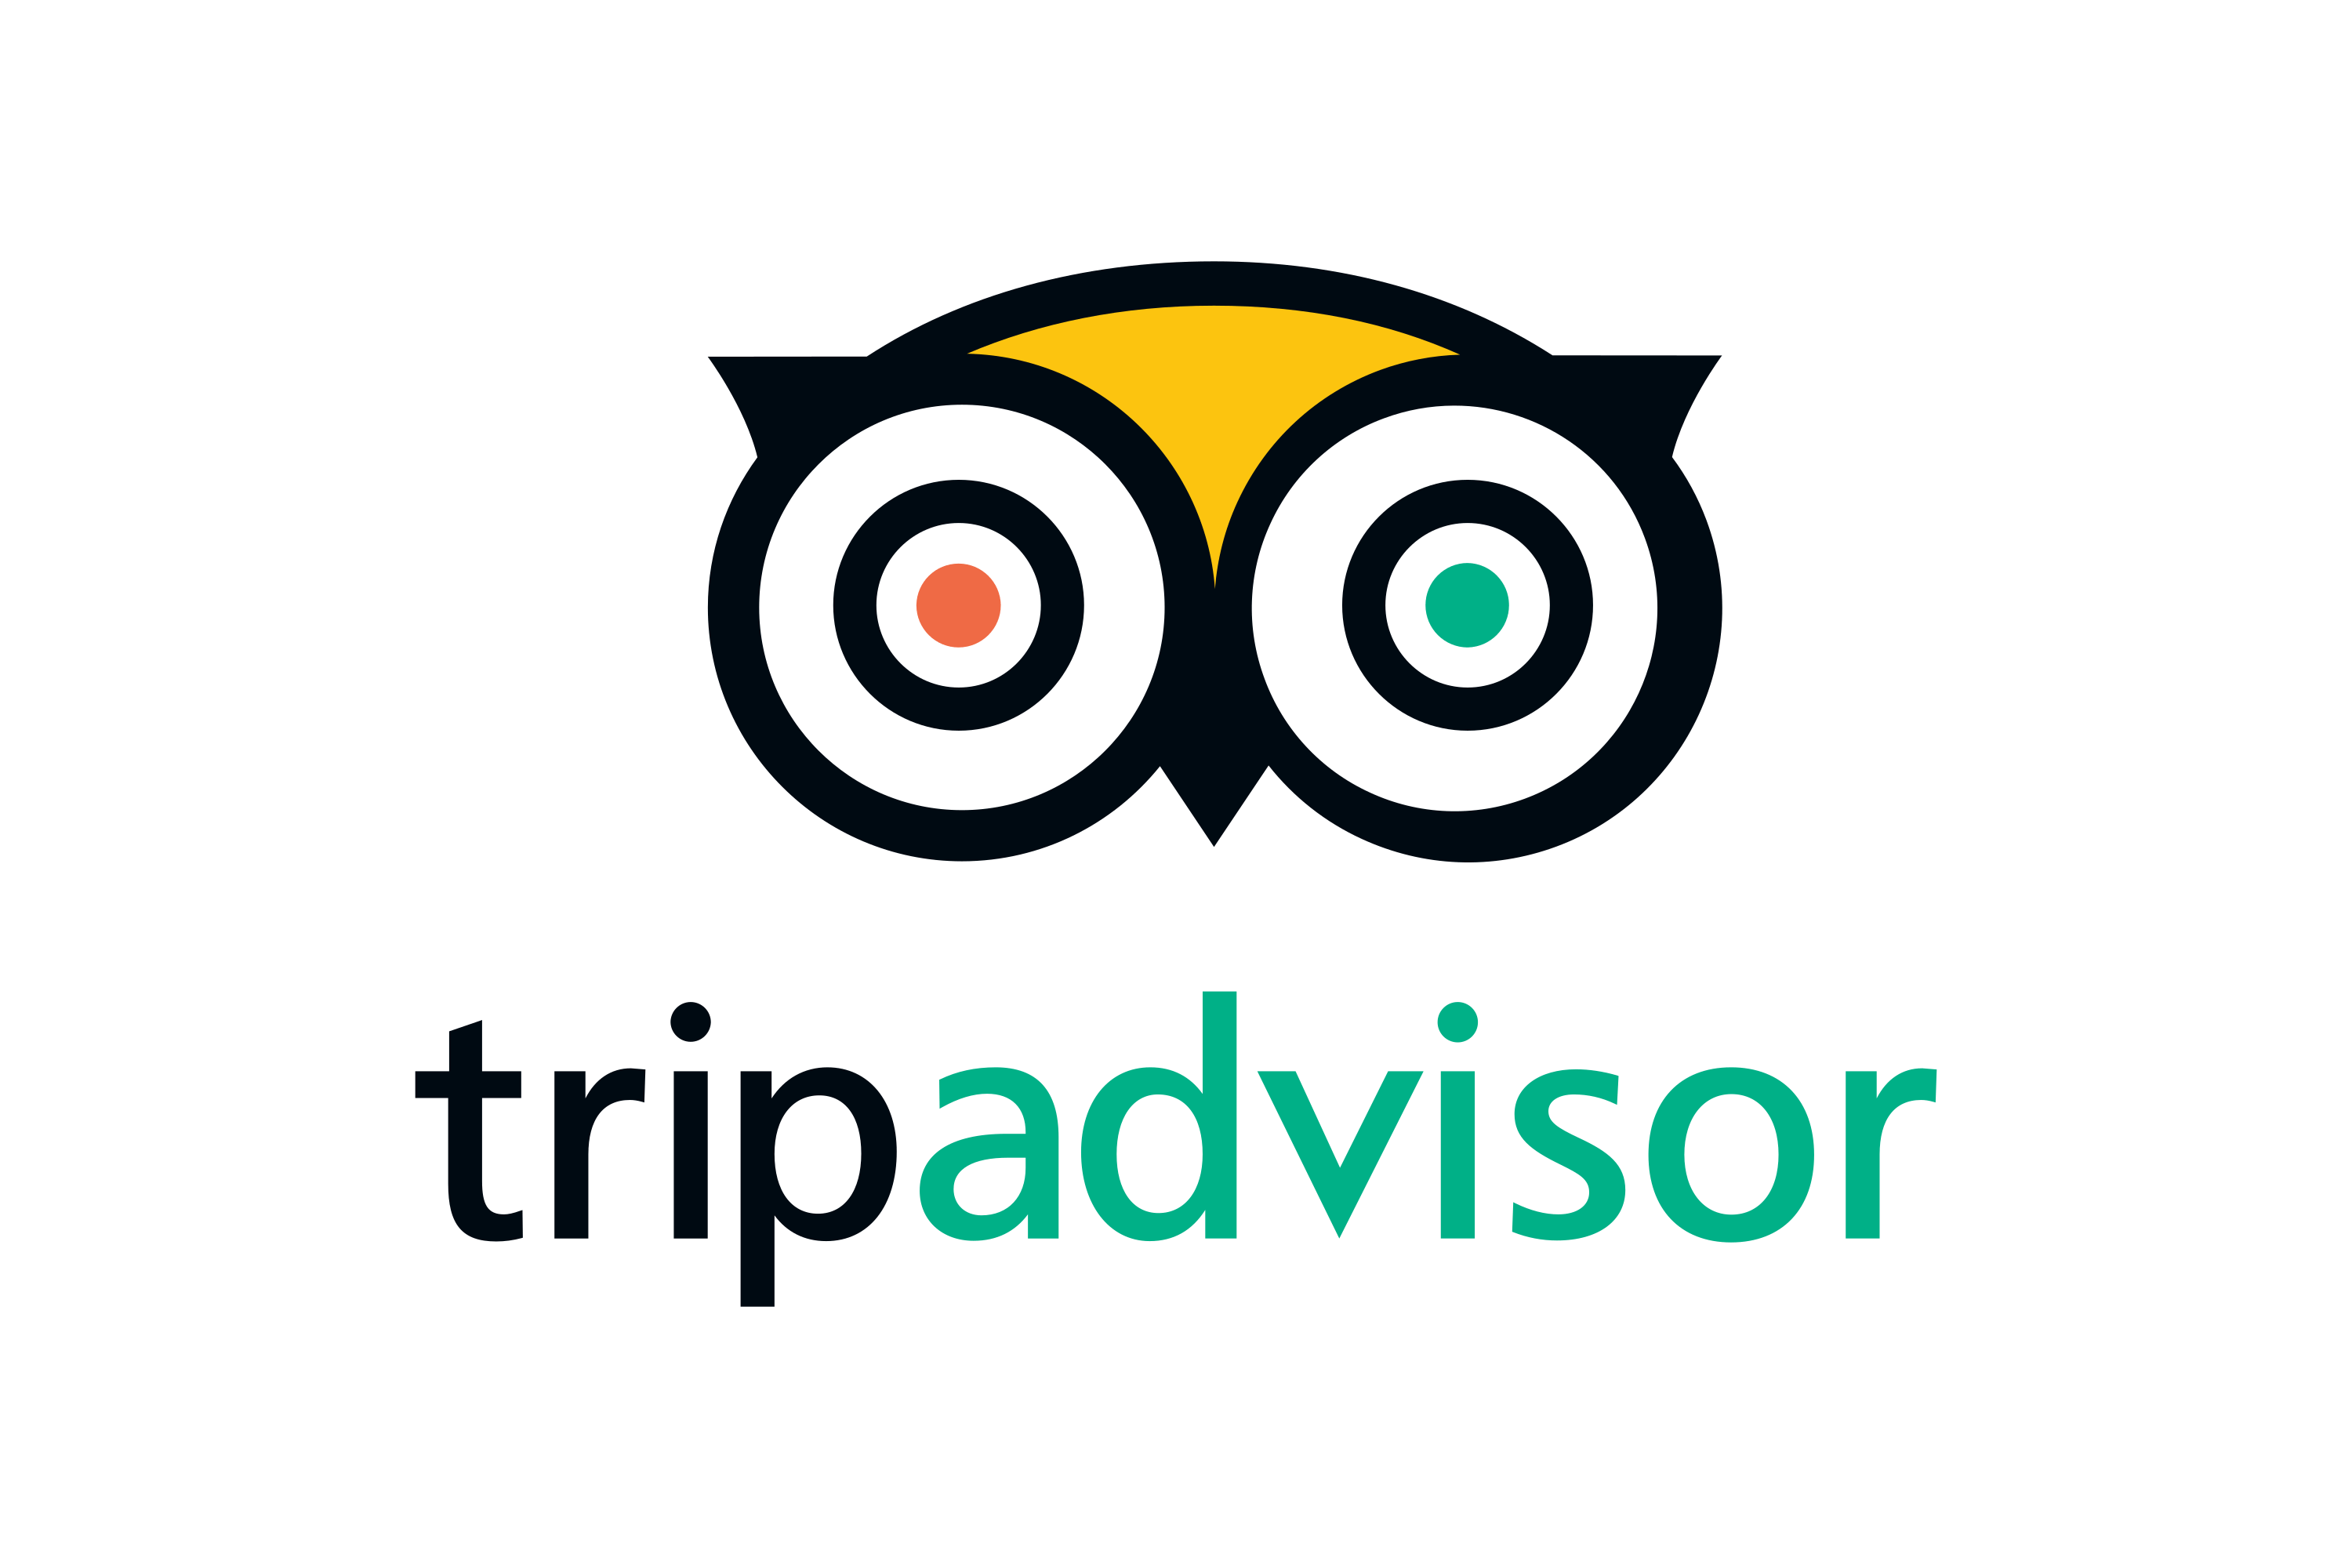 TripAdvisor-Logo.wine